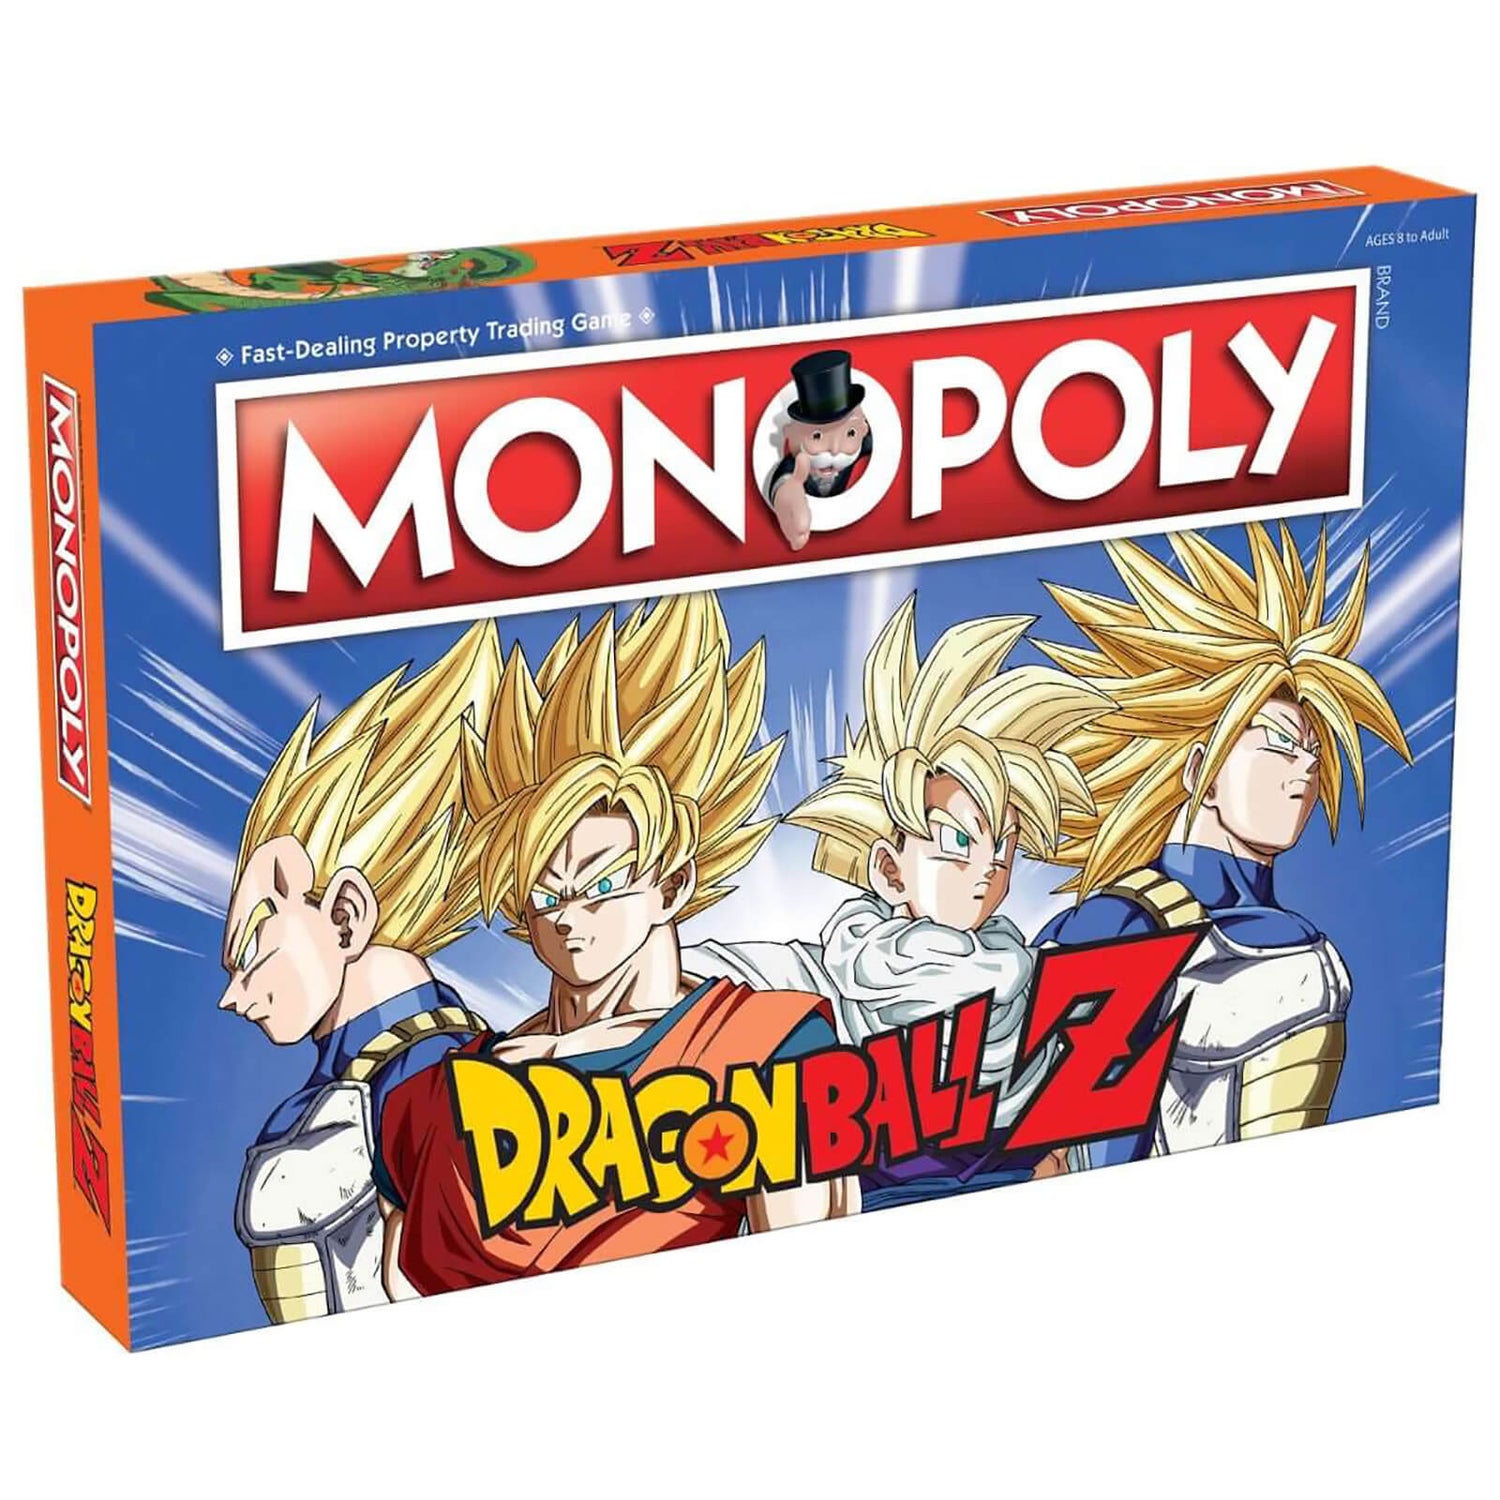 Monopoly Board Game - Dragon Ball Z Edition